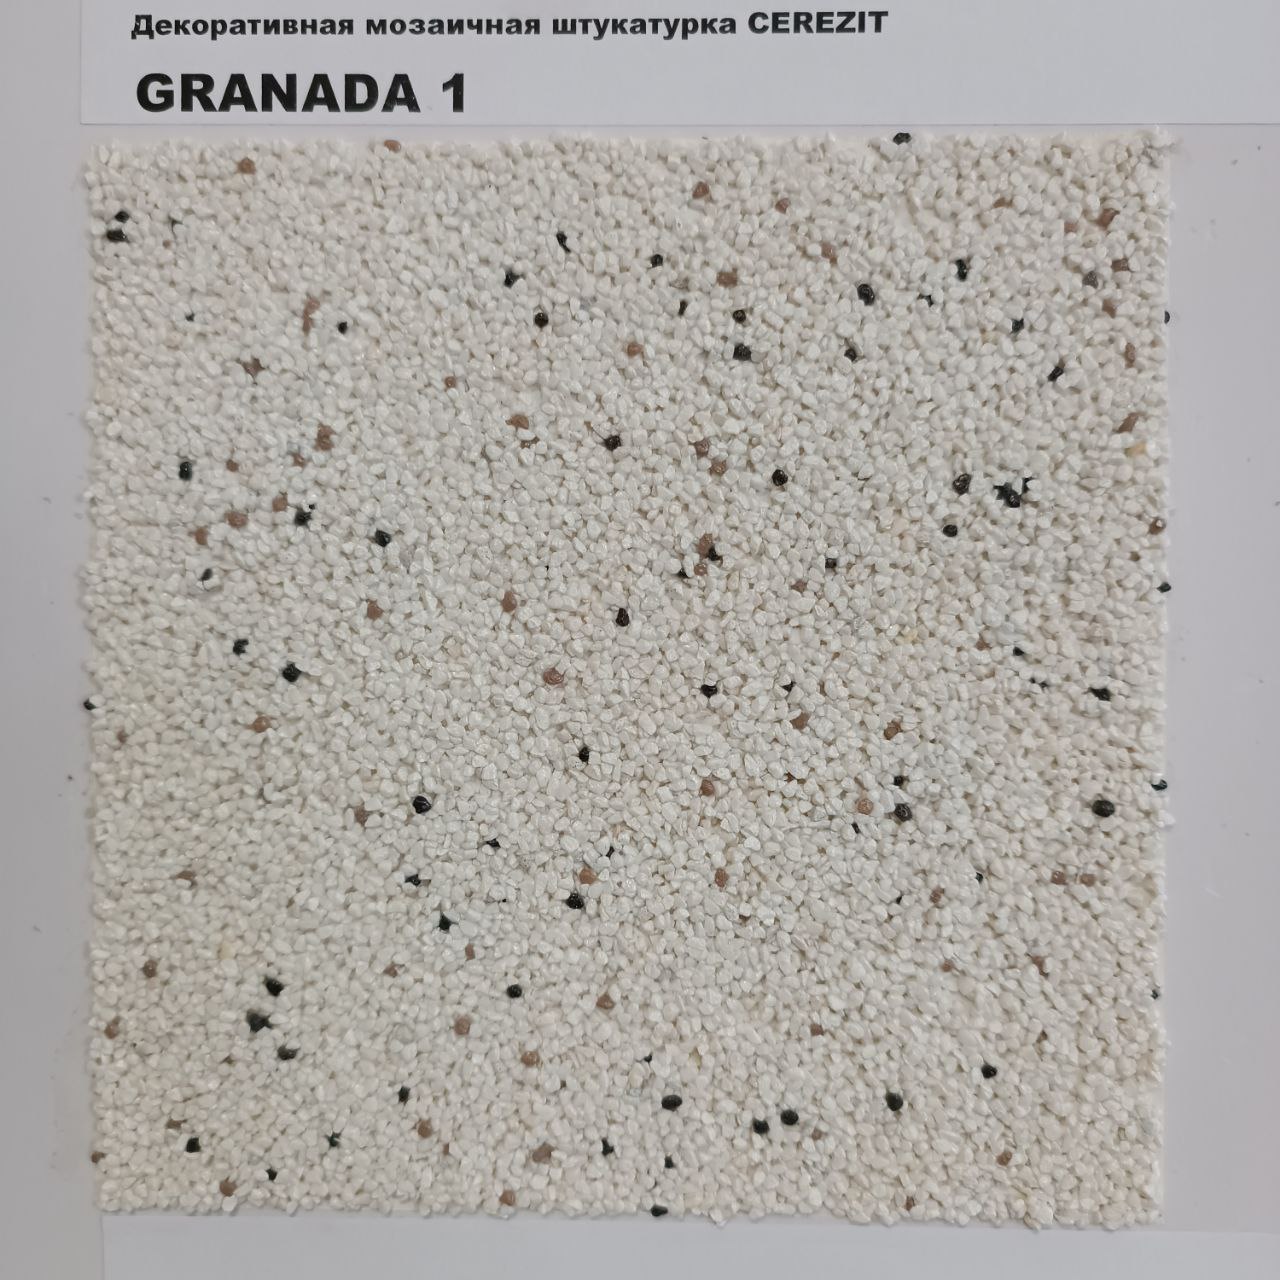 Мозаичная декоративная штукатурка Ceresit CT 77 Granada 1 (1,4-2,0) 25кг